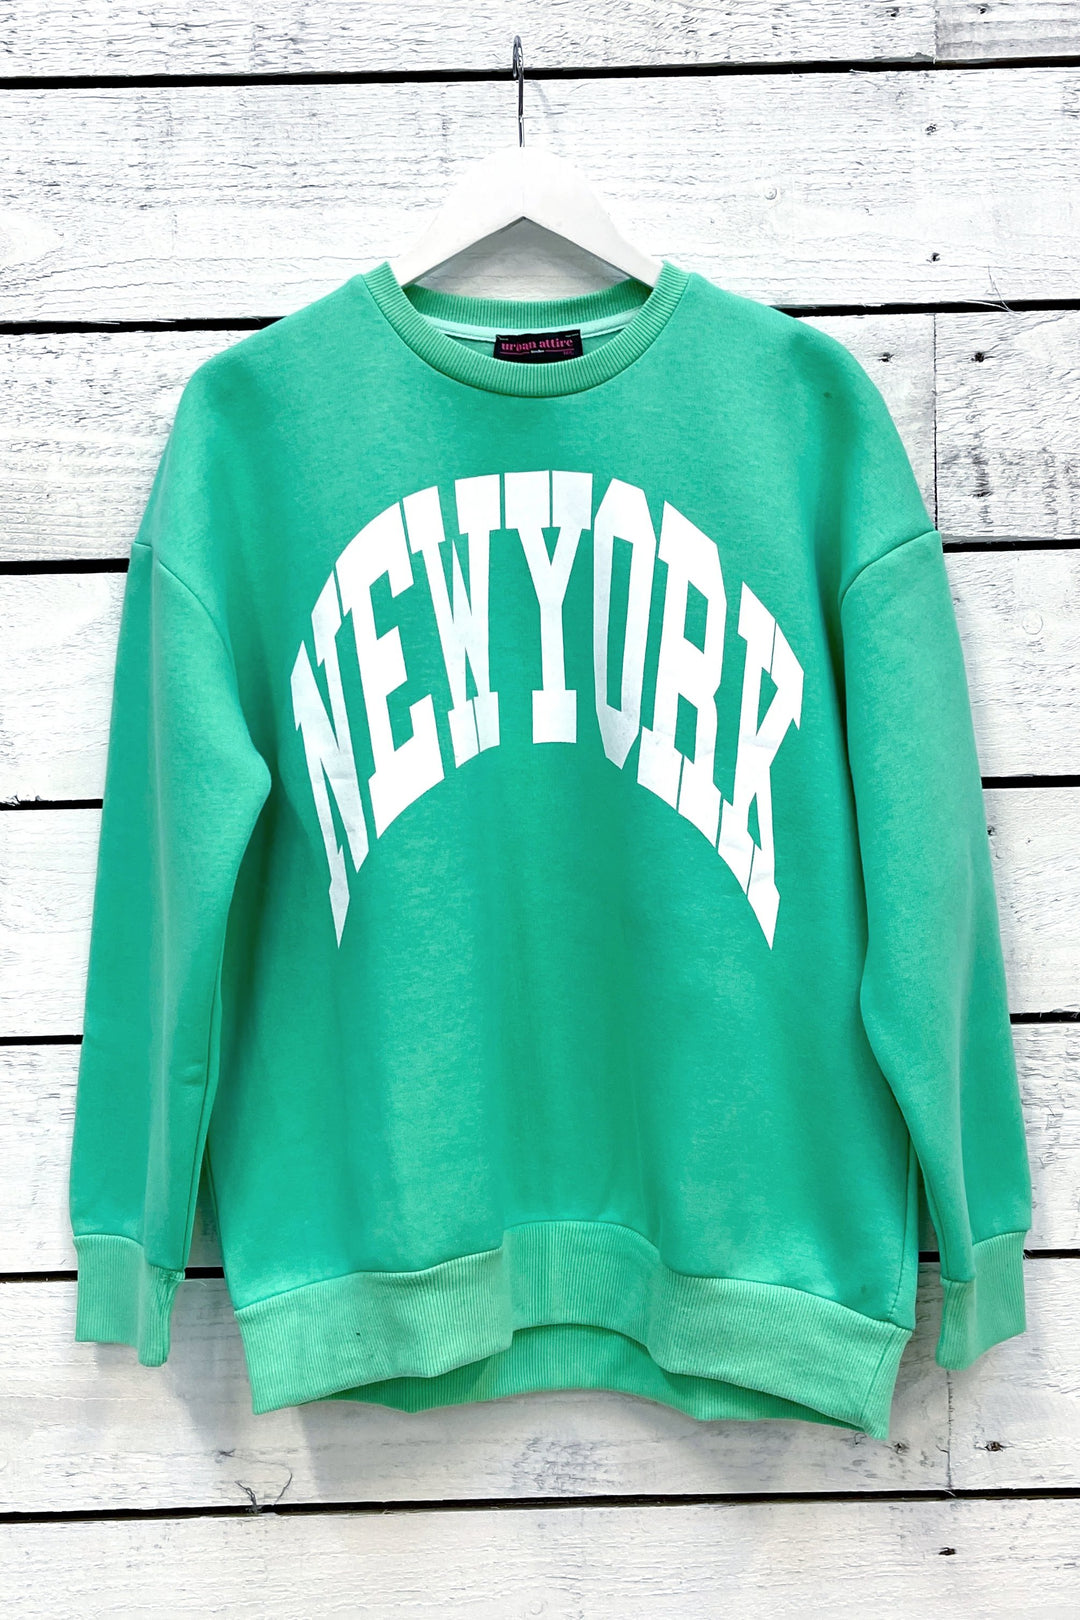 NEW YORK Sweatshirt | Apple Green